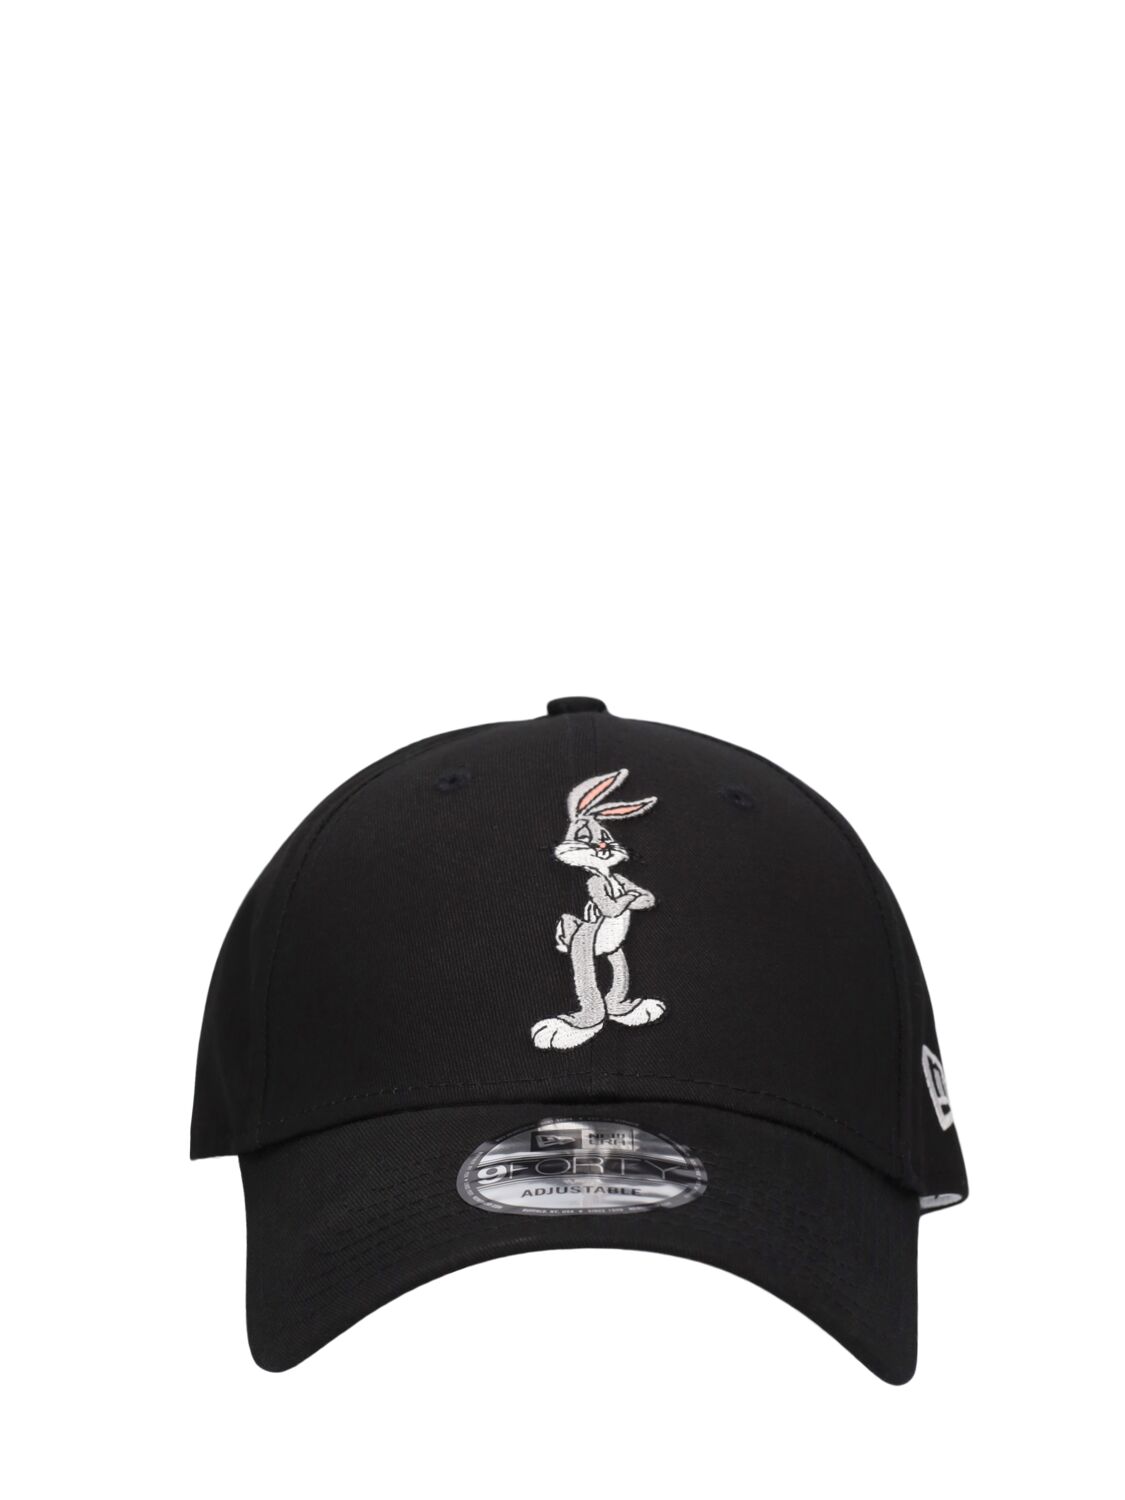 New Era Bugs Bunny Looney Tunes 9forty帽子 In Black,grey